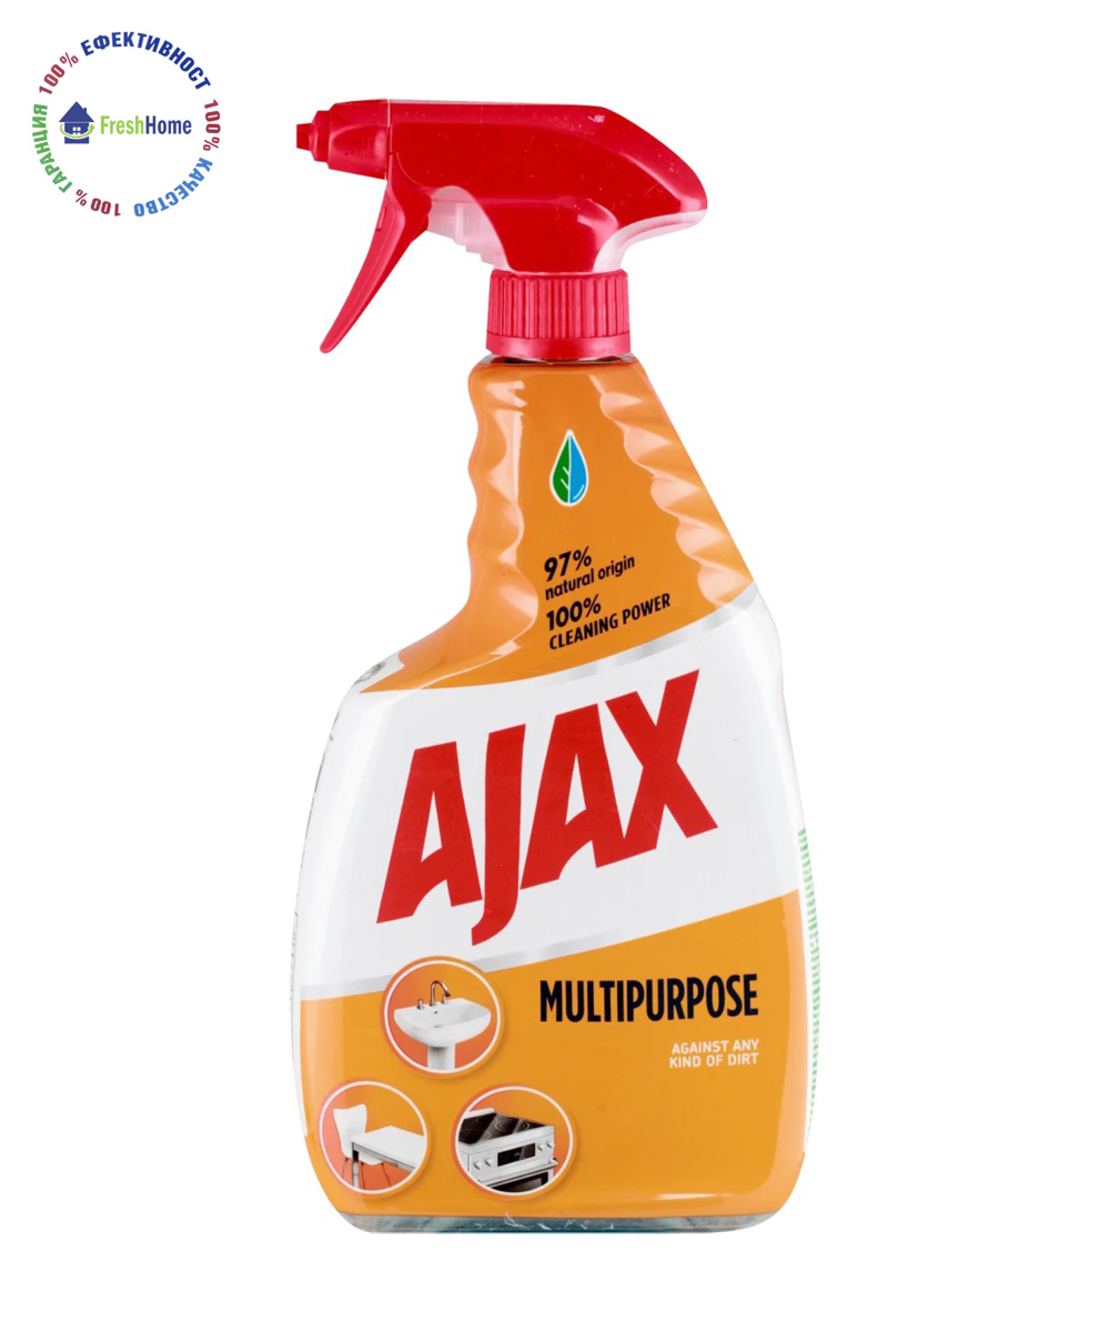 AJAX Multipurpose спрей за почисване на повърхности 750 мл.